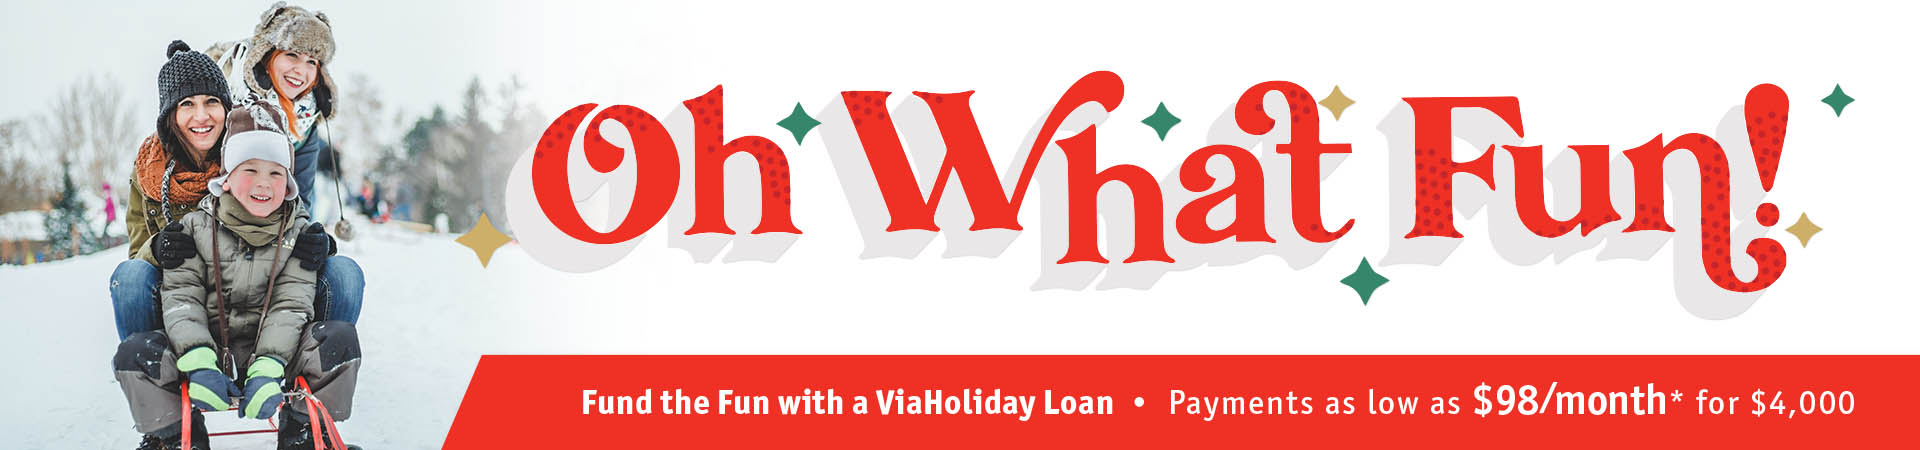 ViaHoliday Loan